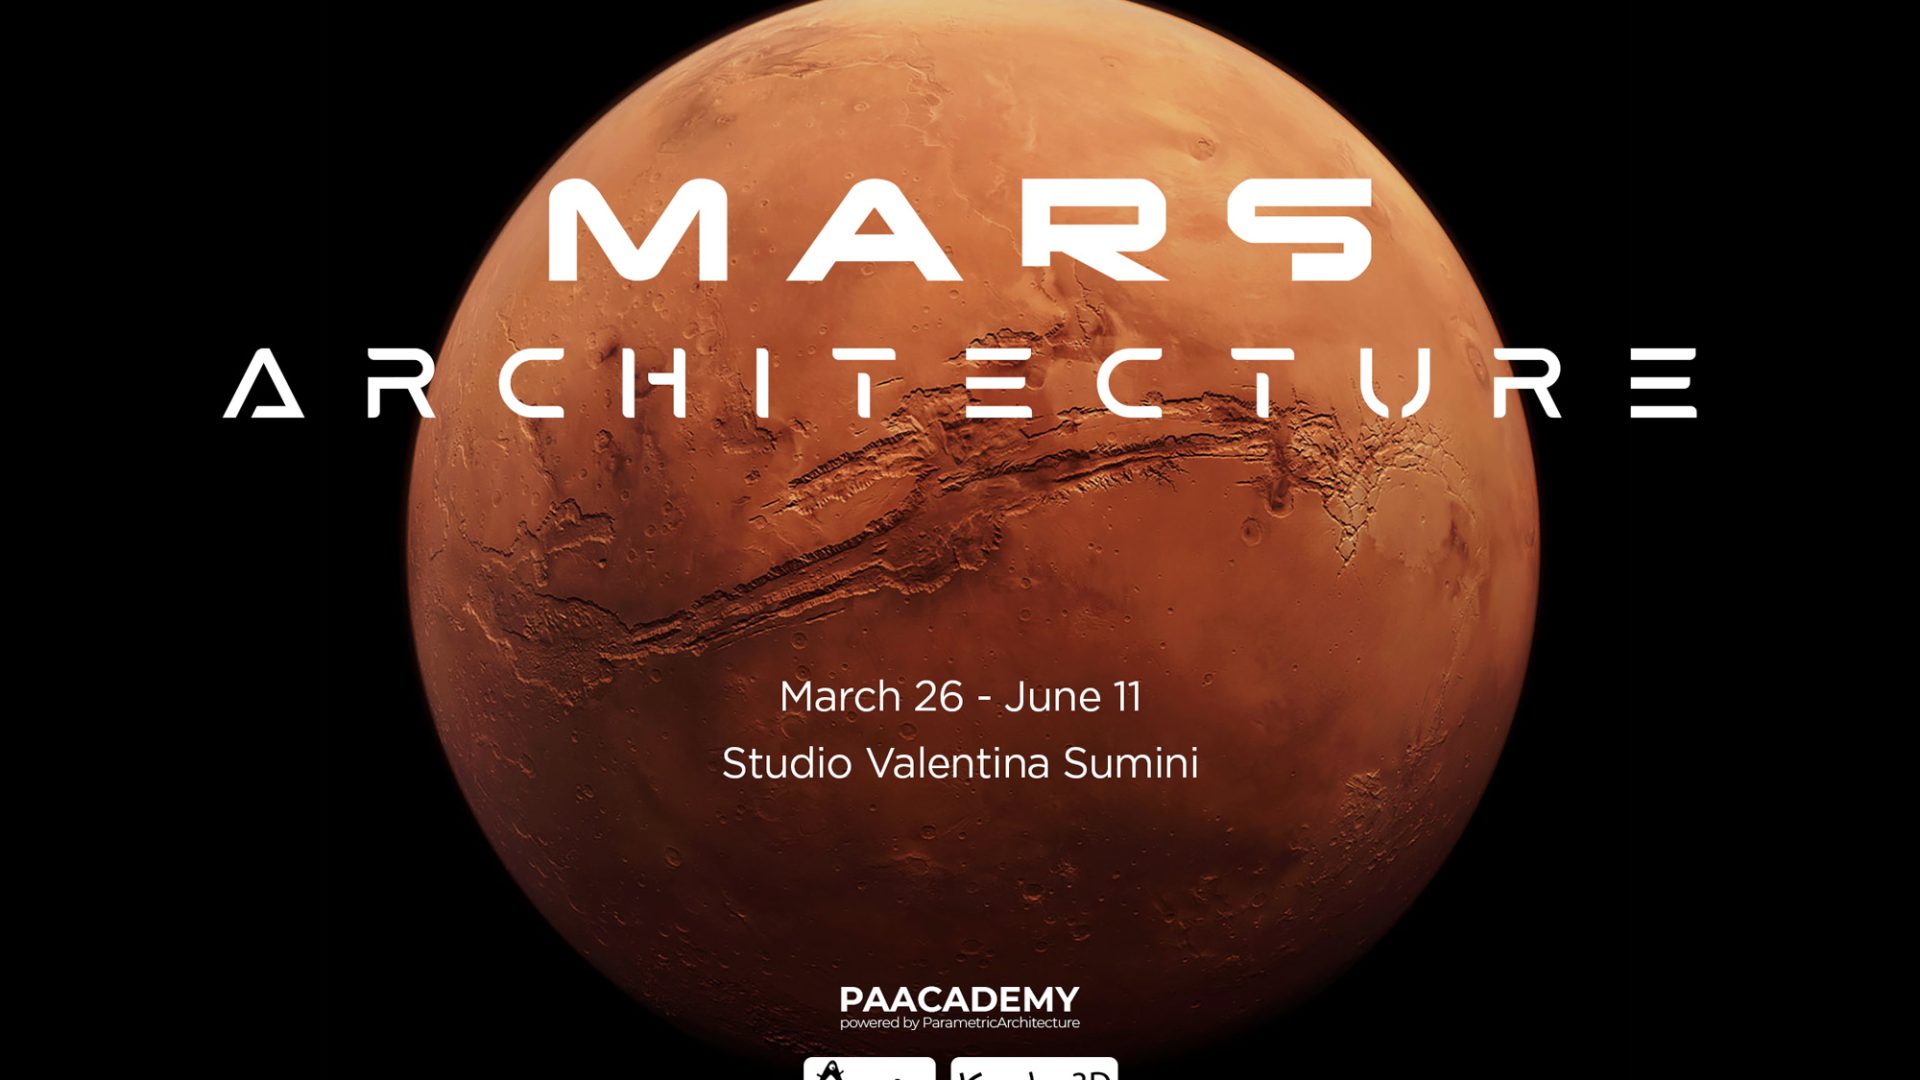 Mars Architecture